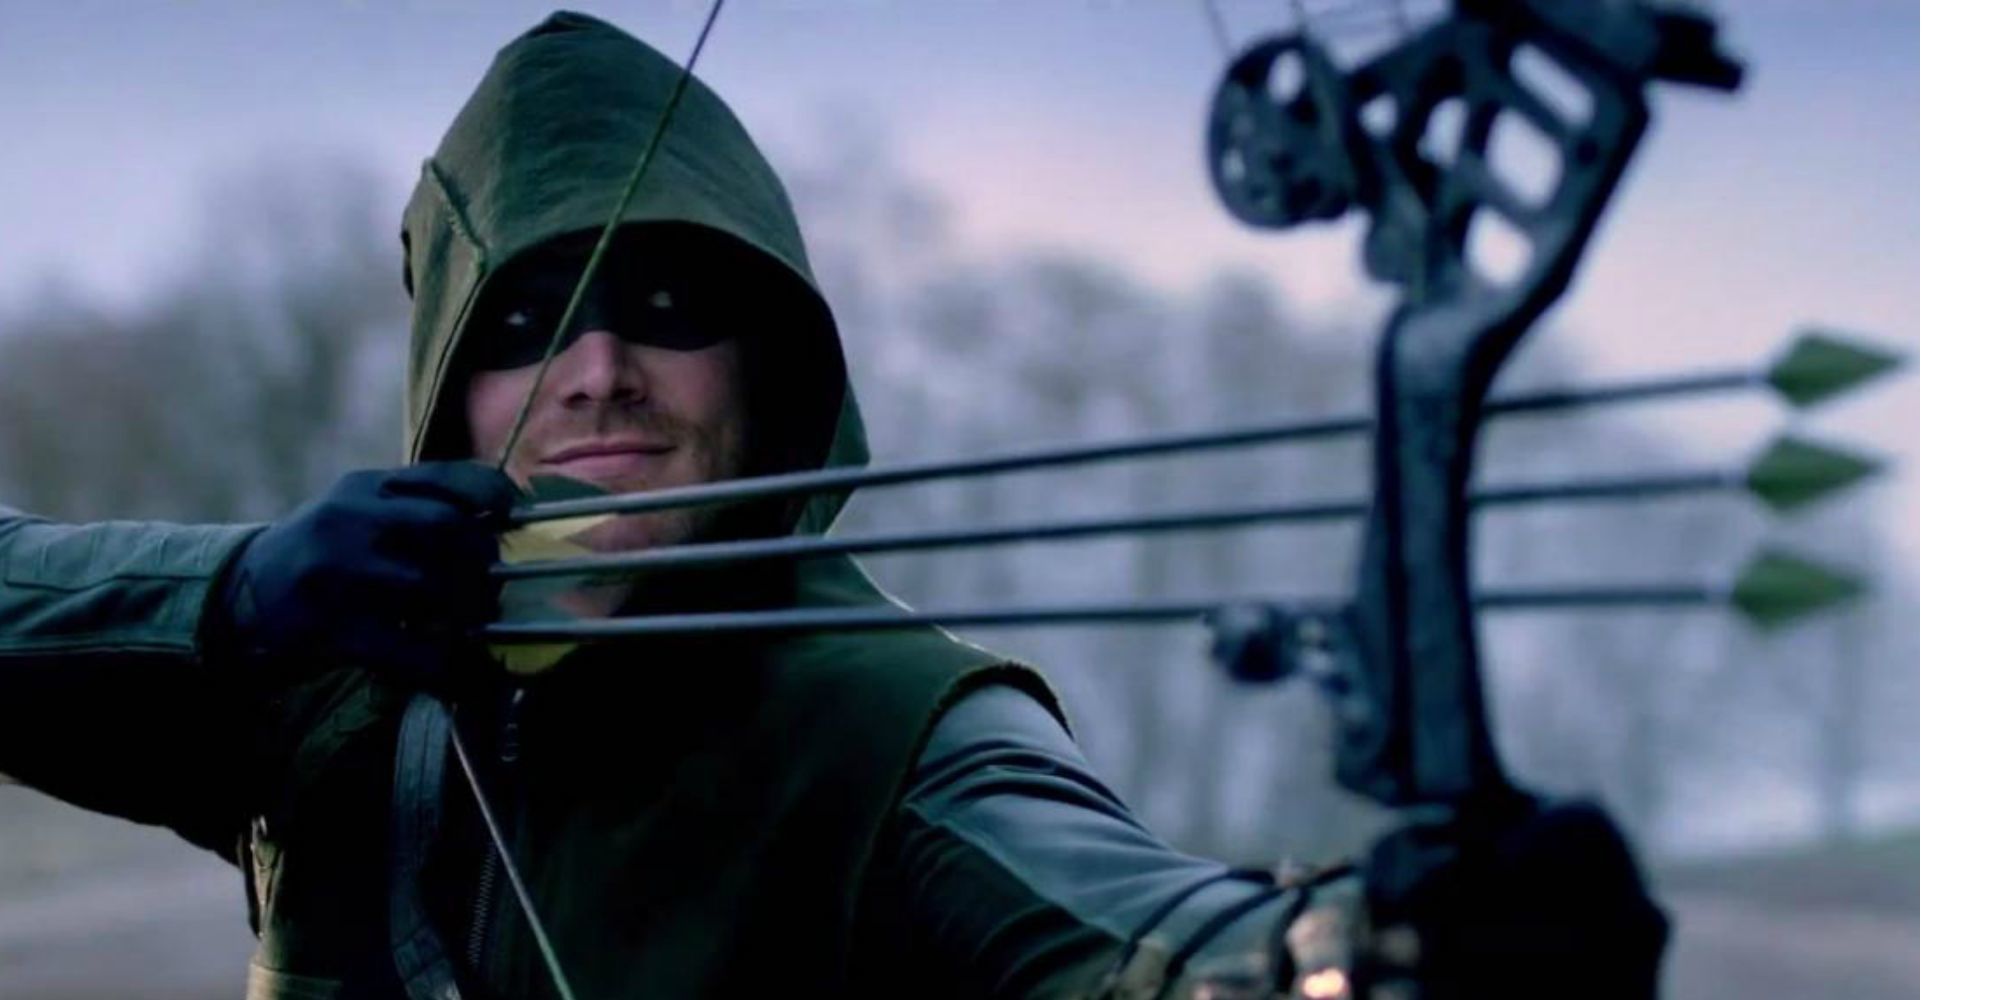 Stephen Amell As Green Arrow